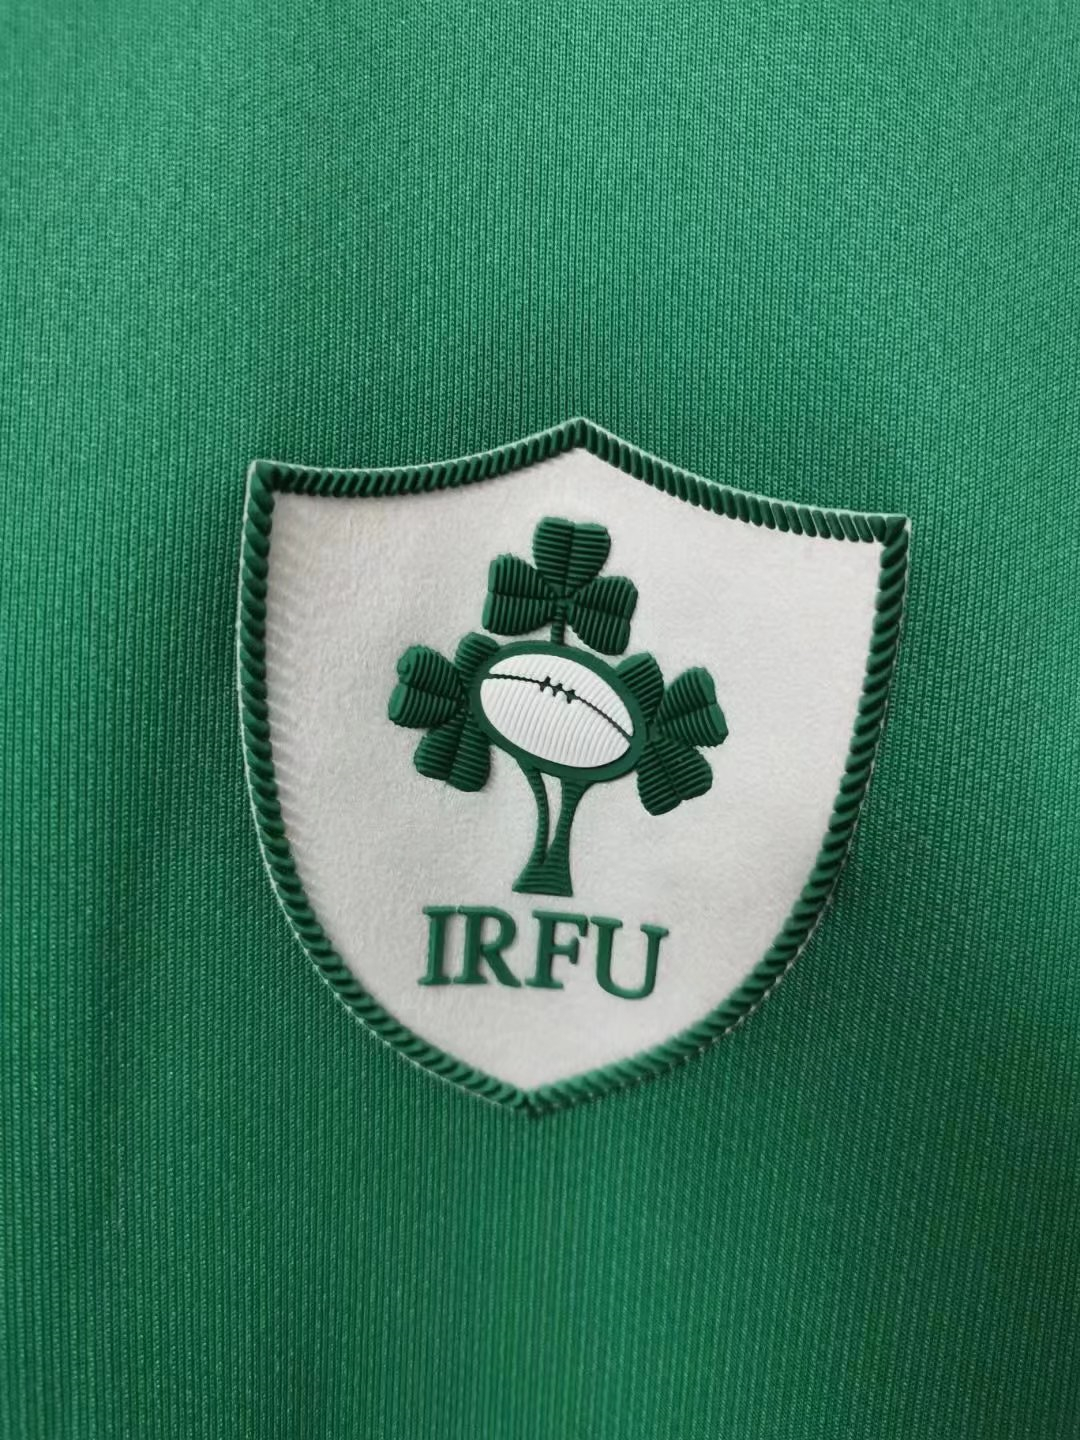 Ireland IRFU Soccer Jersey Replica Rugby Home Mens 2021/22 